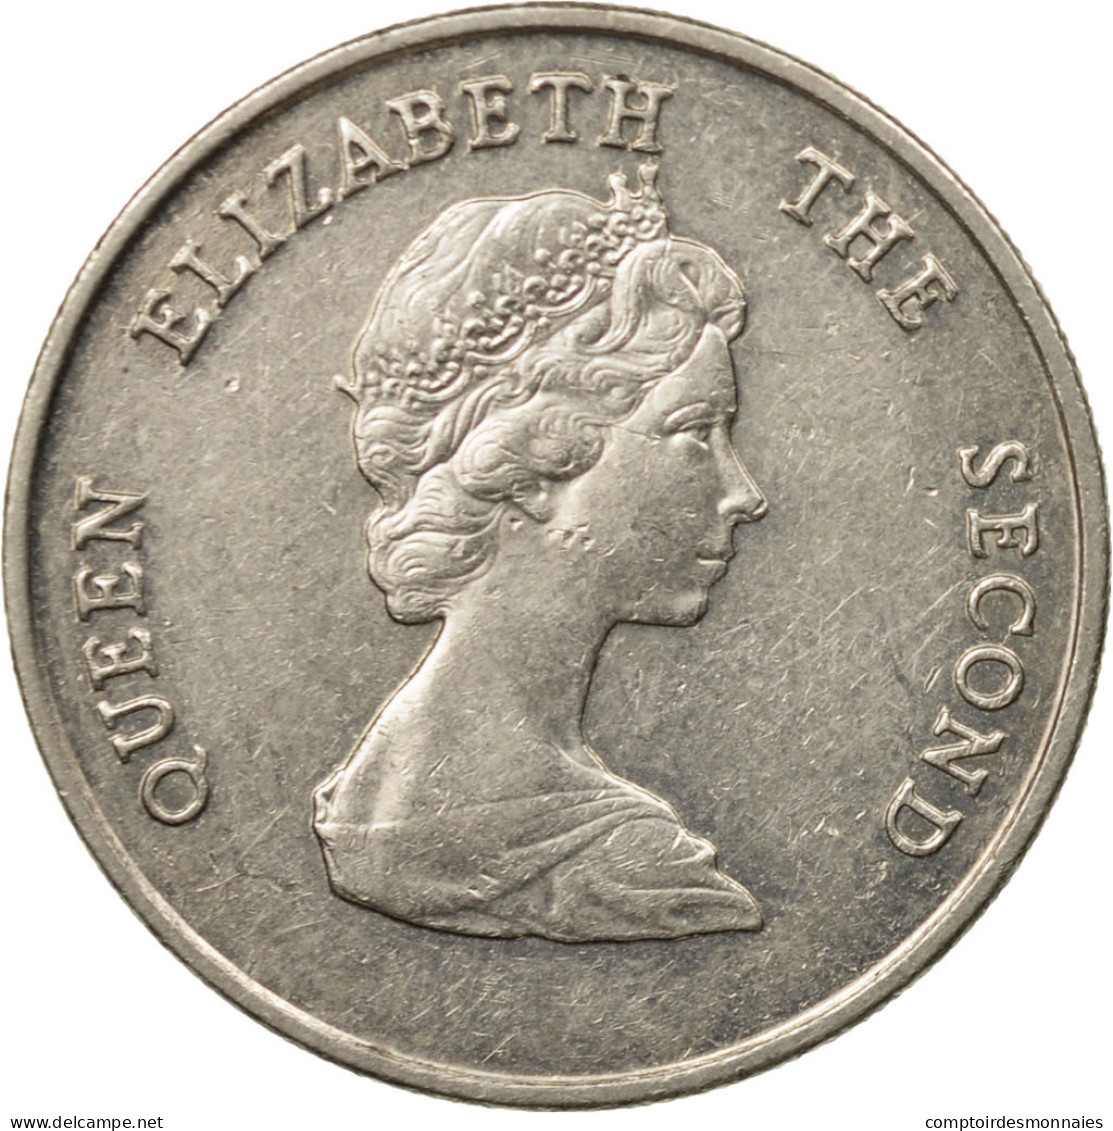 Monnaie, Etats Des Caraibes Orientales, Elizabeth II, 25 Cents, 1995, TTB - Caribe Británica (Territorios Del)